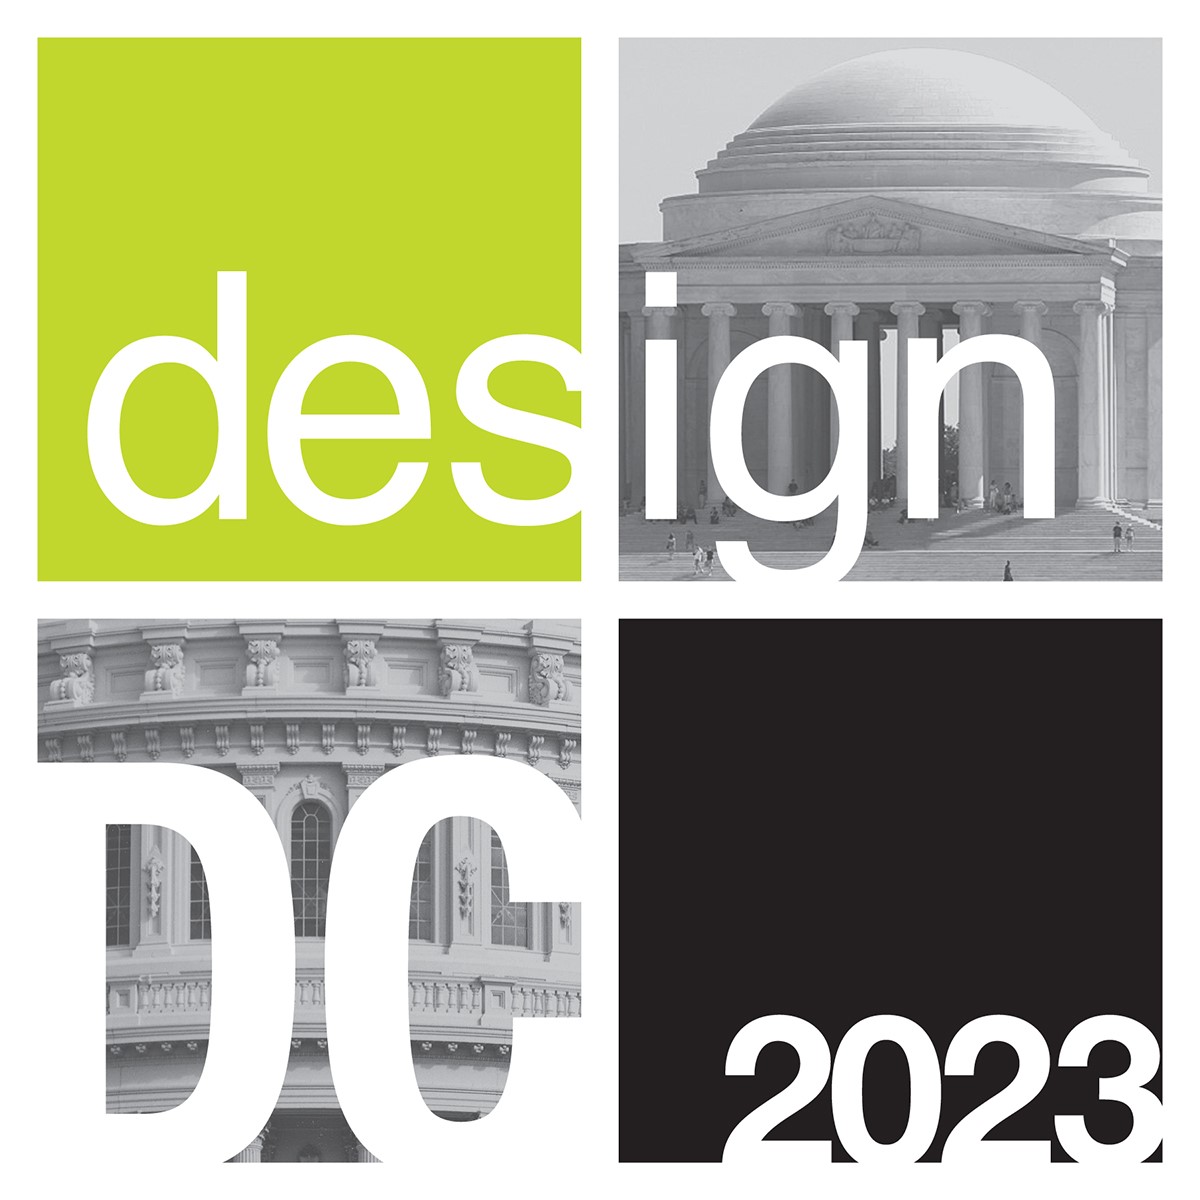 DesignDC logo with "2023" in lower righthand corner